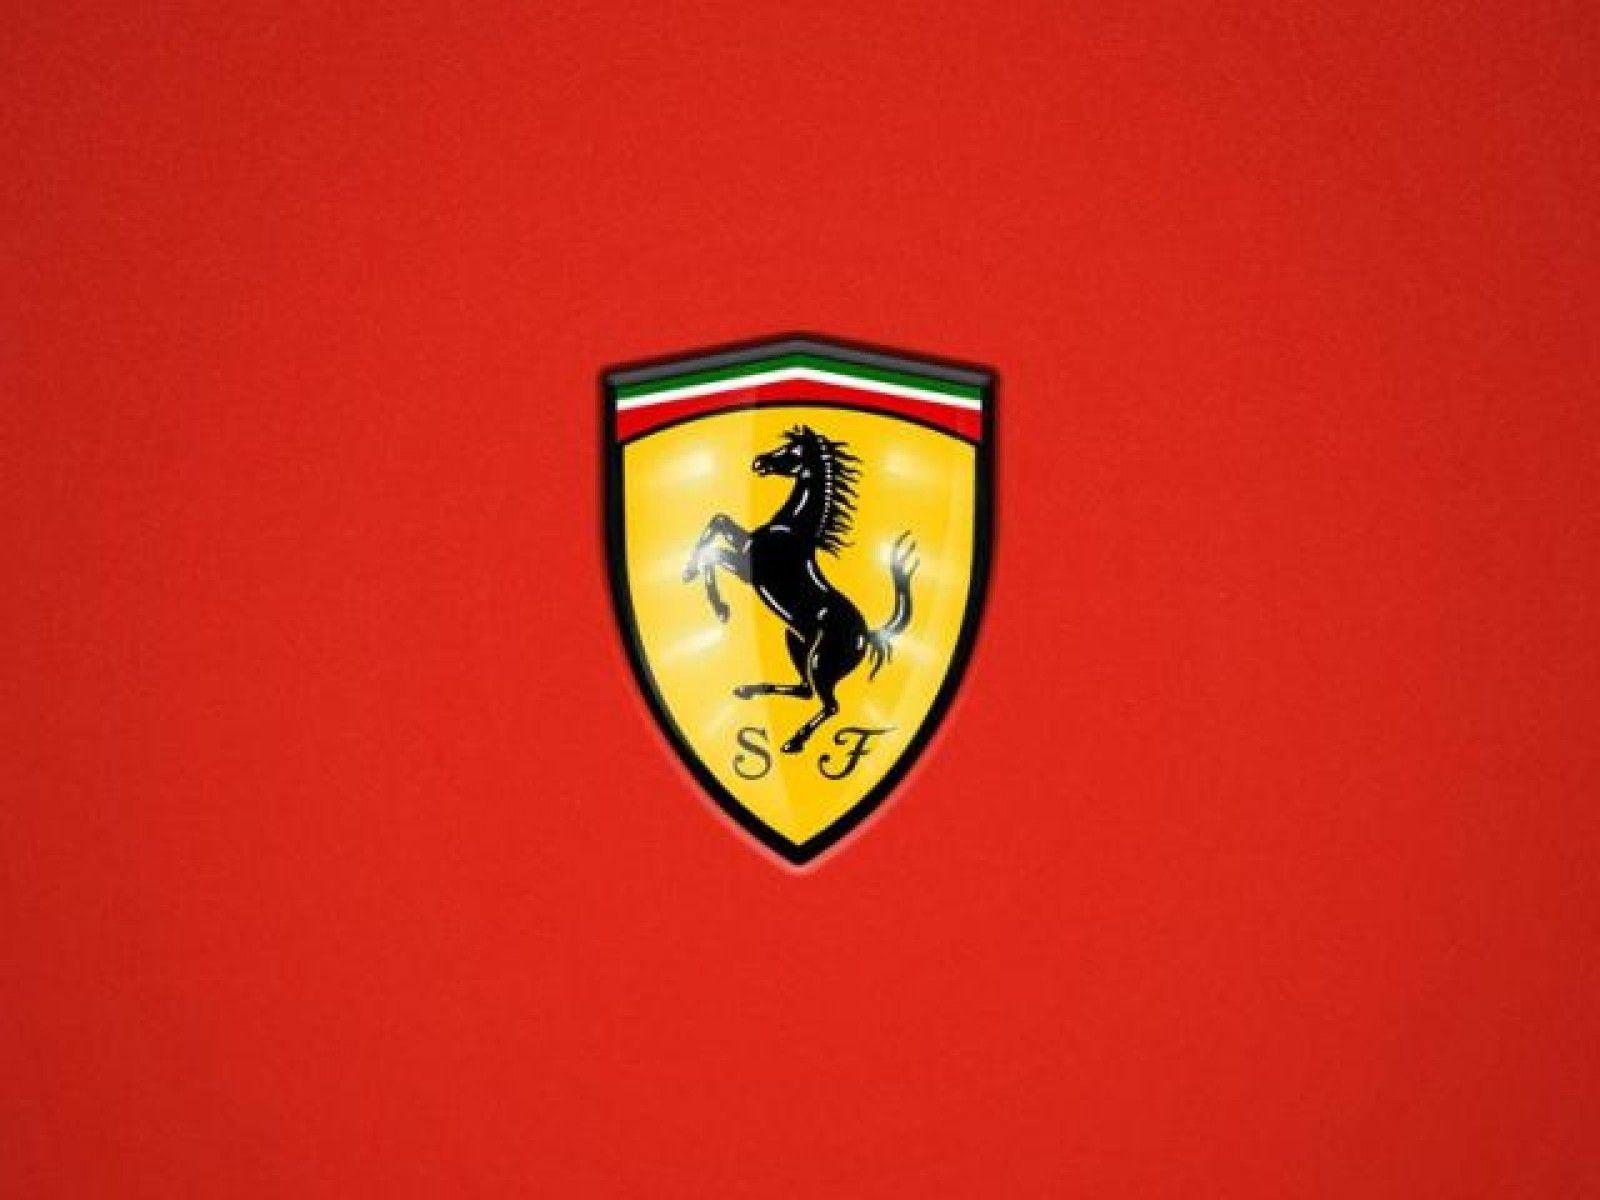 Ferrari Logo 38 43927 Image HD Wallpaper. Wallfoy.com